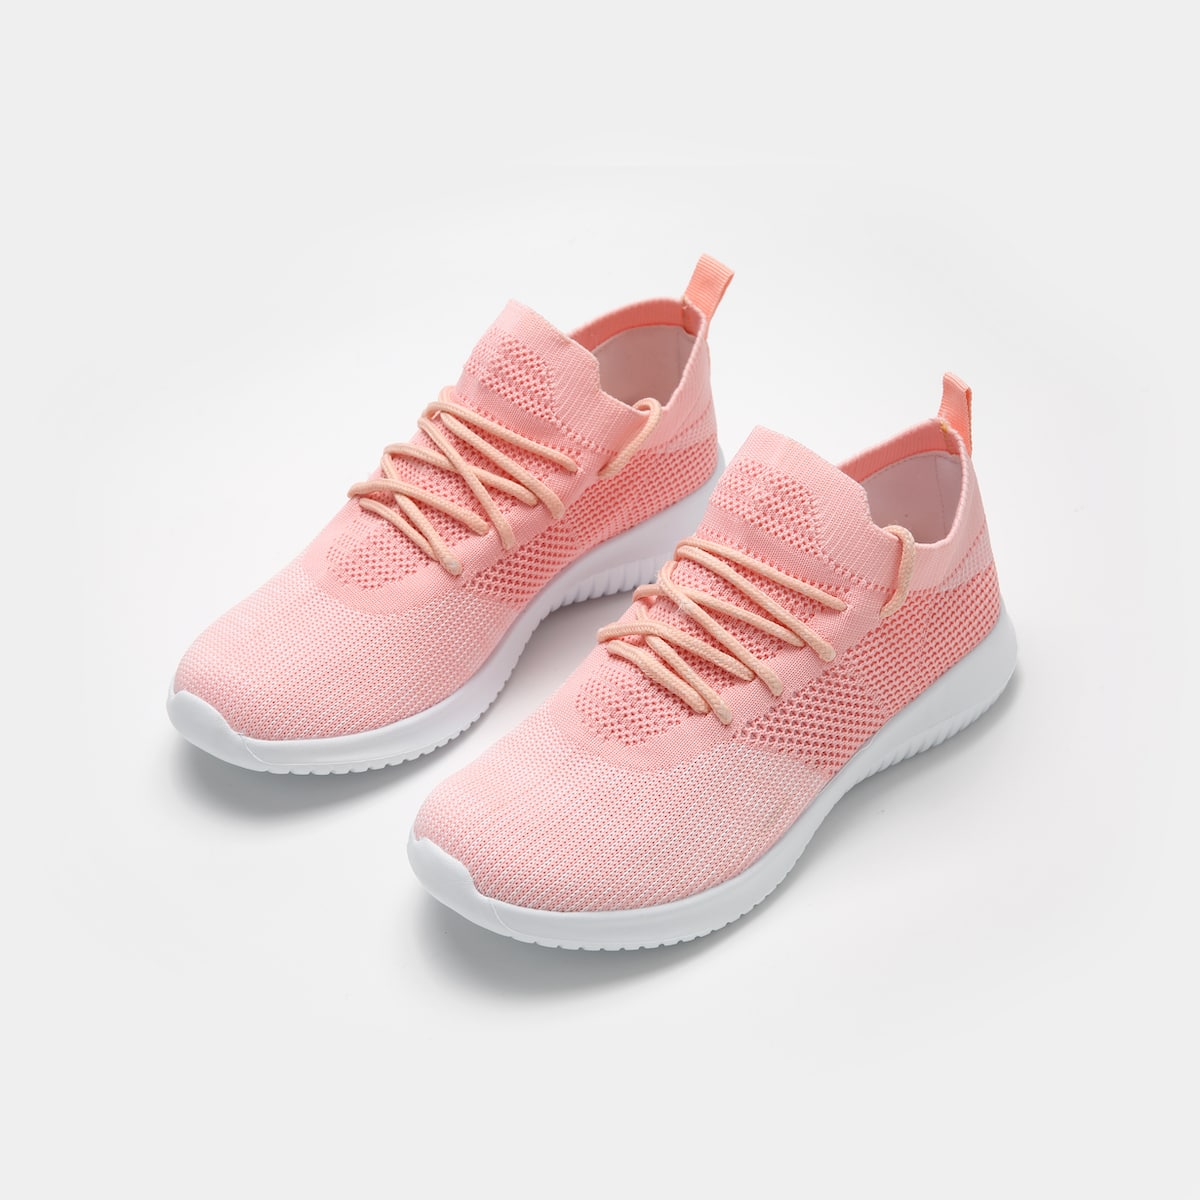 8: Sneakers Dame - Pink - model JH102